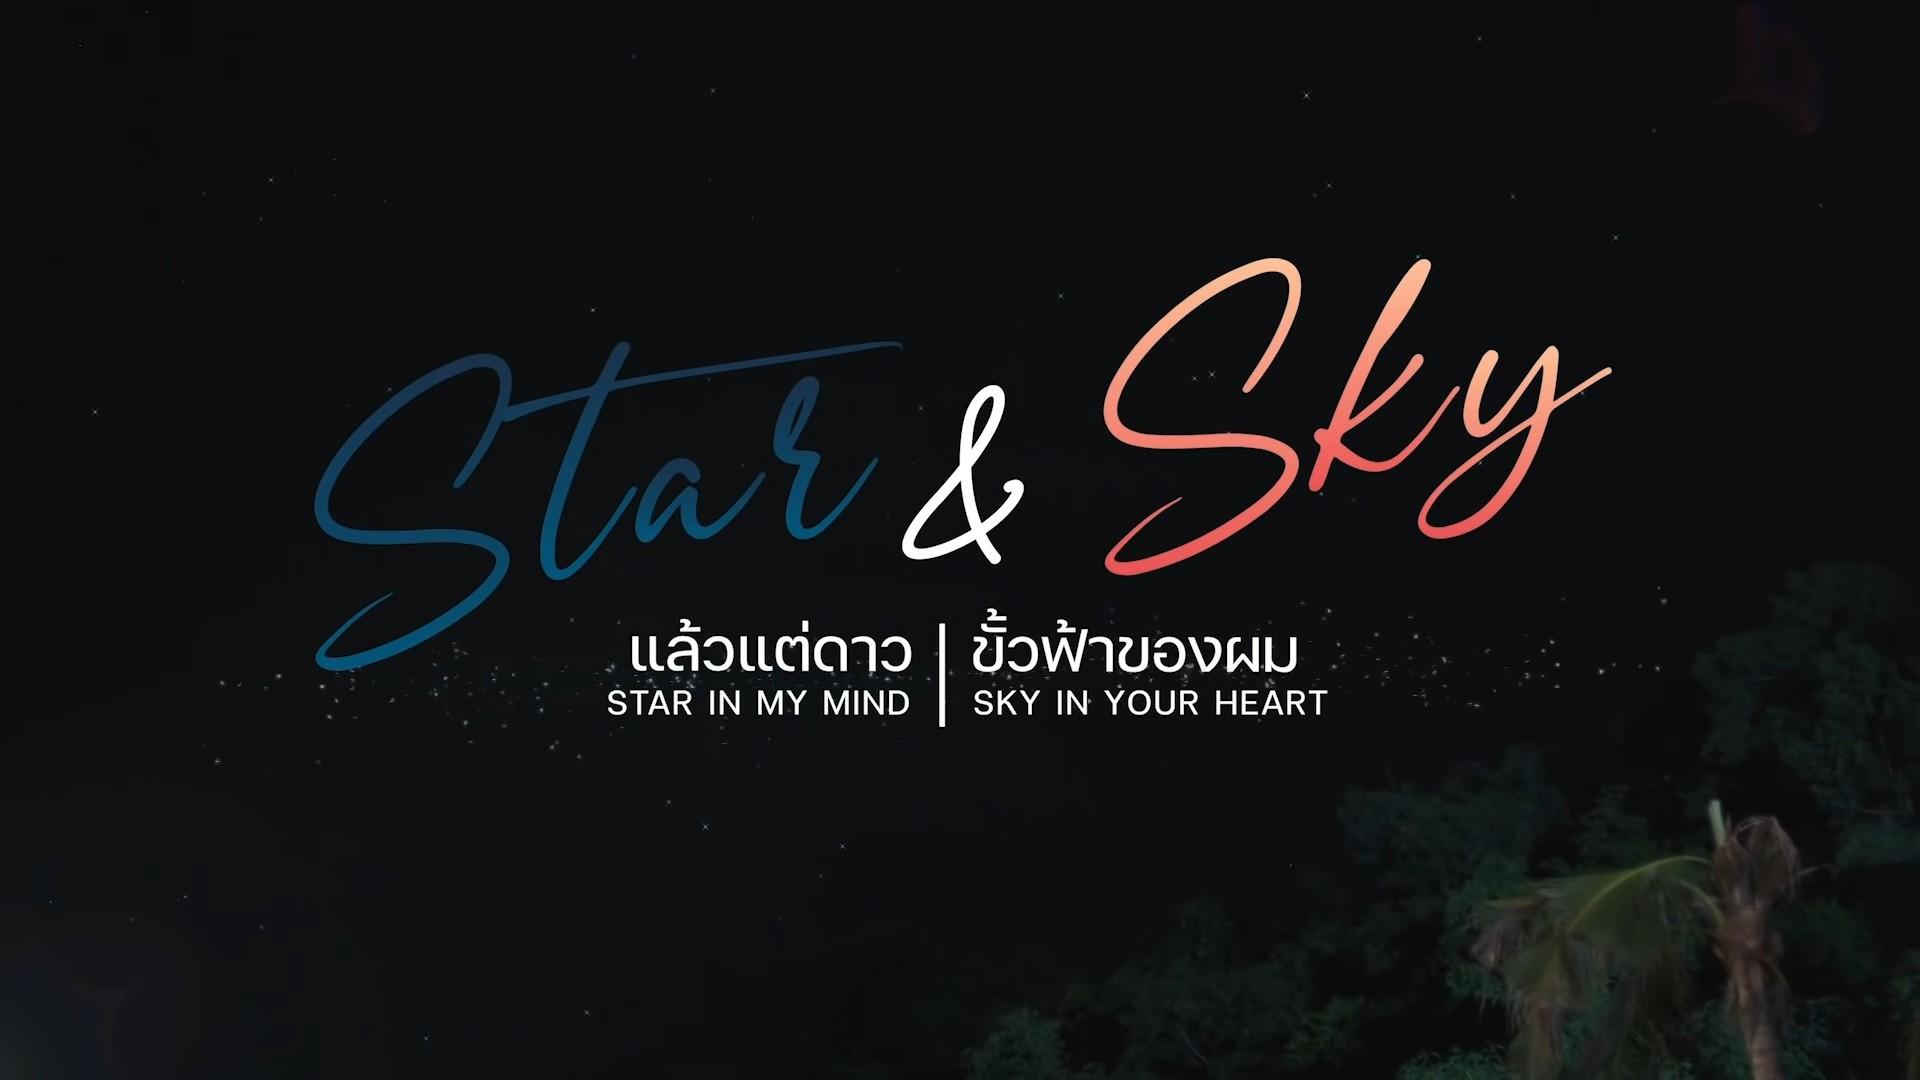 Star & Sky: Sky in Your Heart